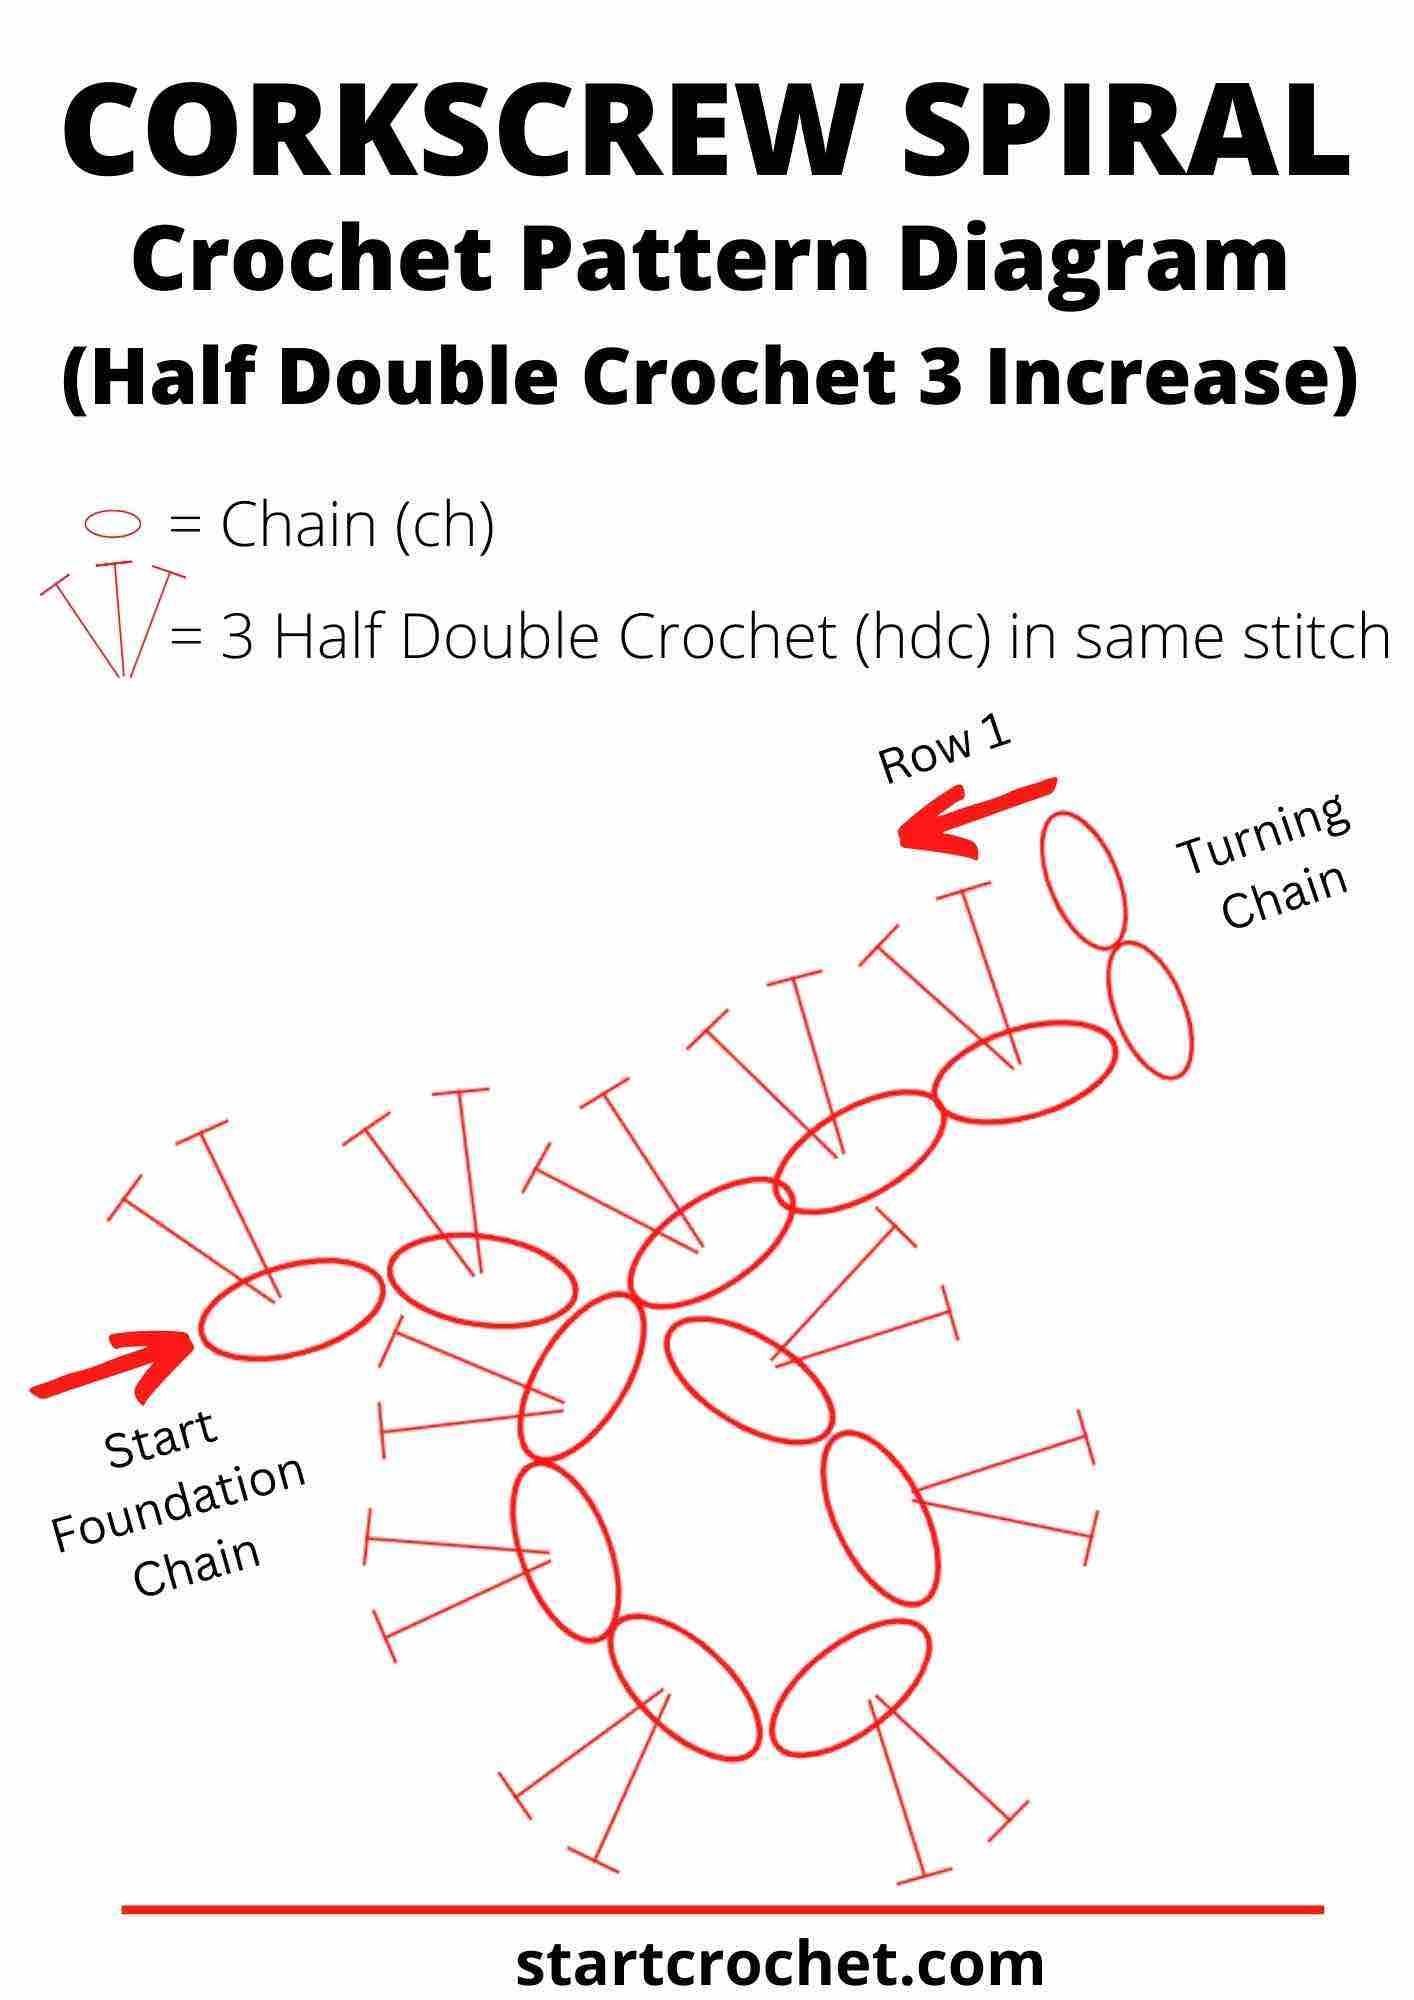 Corkscrew-Spiral-pattern-Diagram-hdc-3-increase